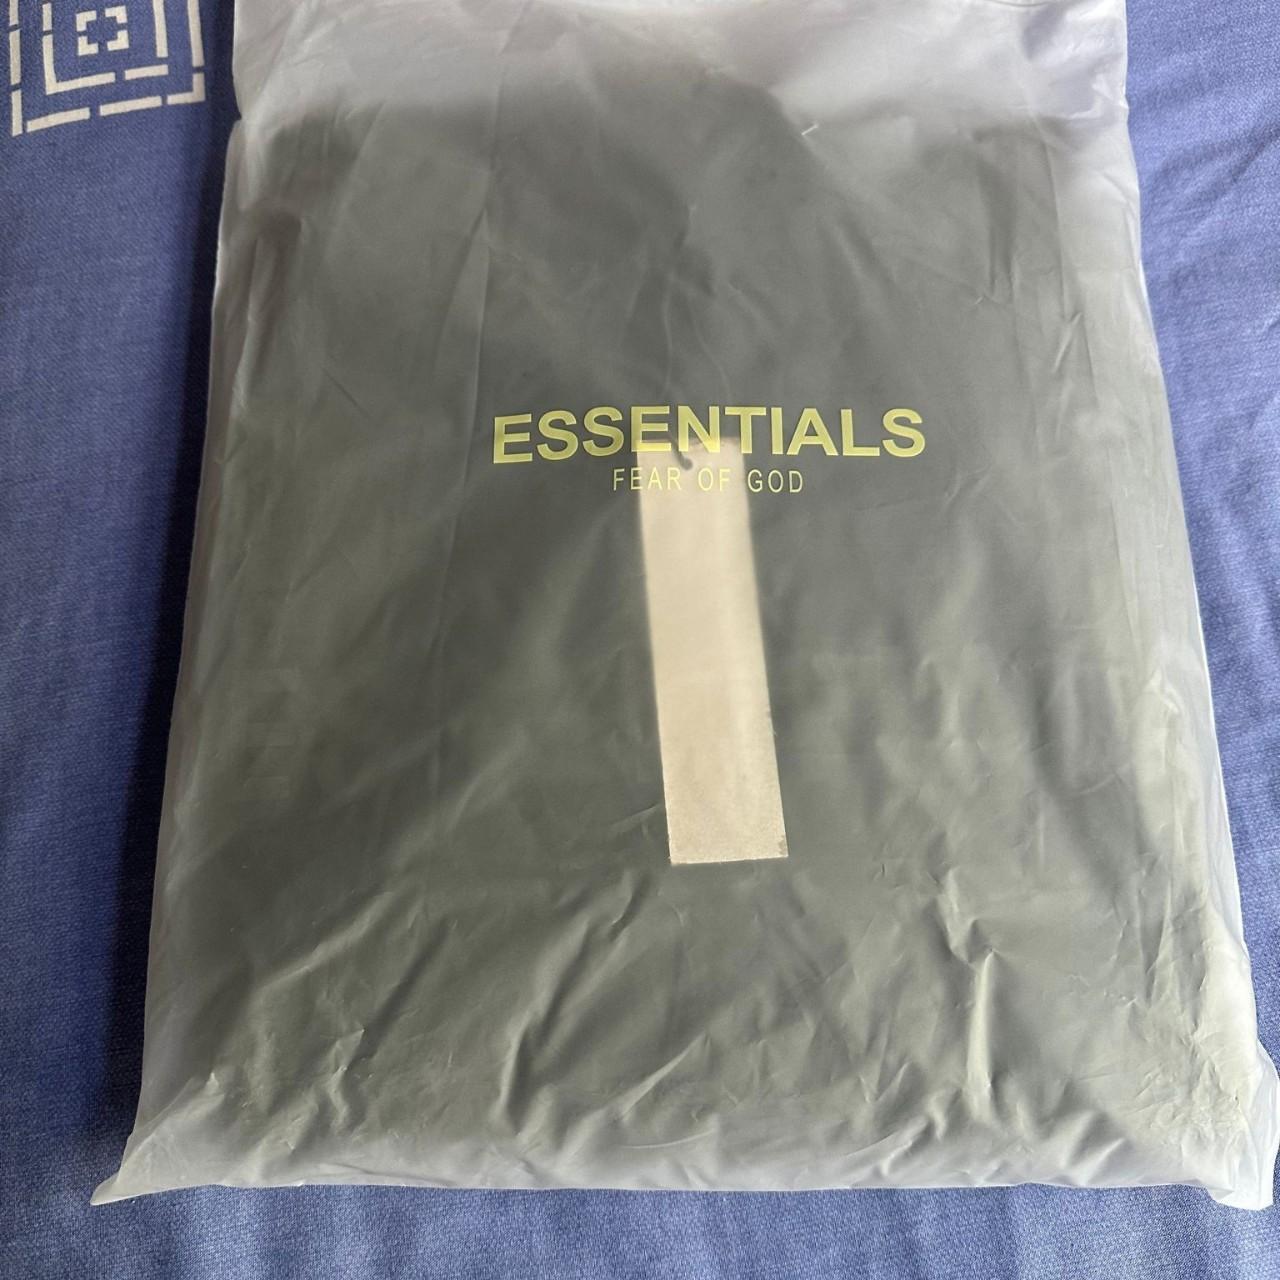 Black Essentials (Fear of God) hoodie Never... - Depop